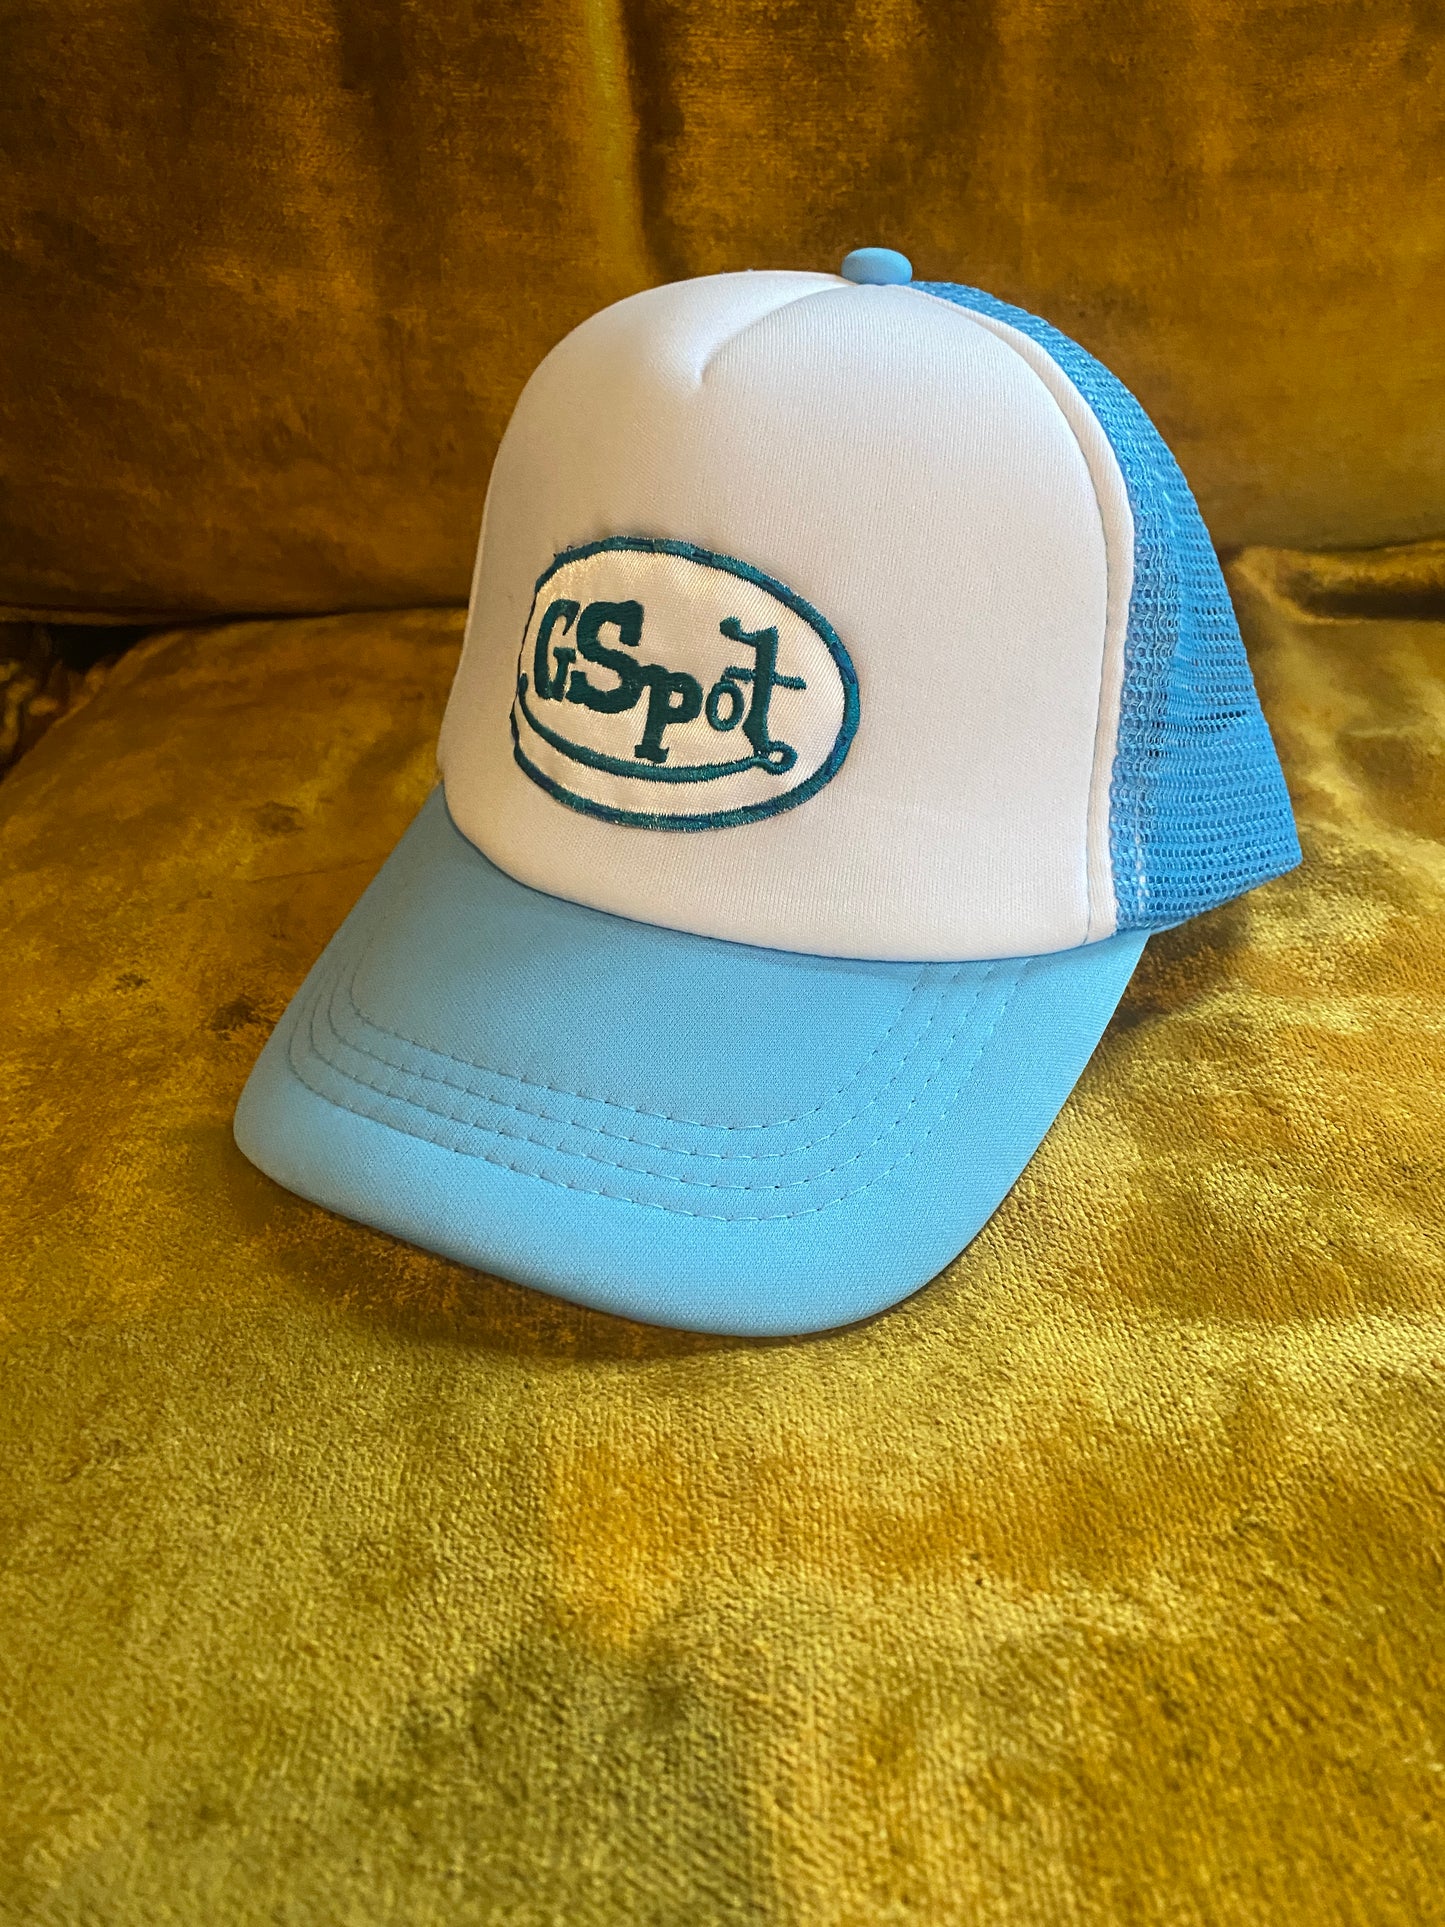 G Spot Trucker Hat